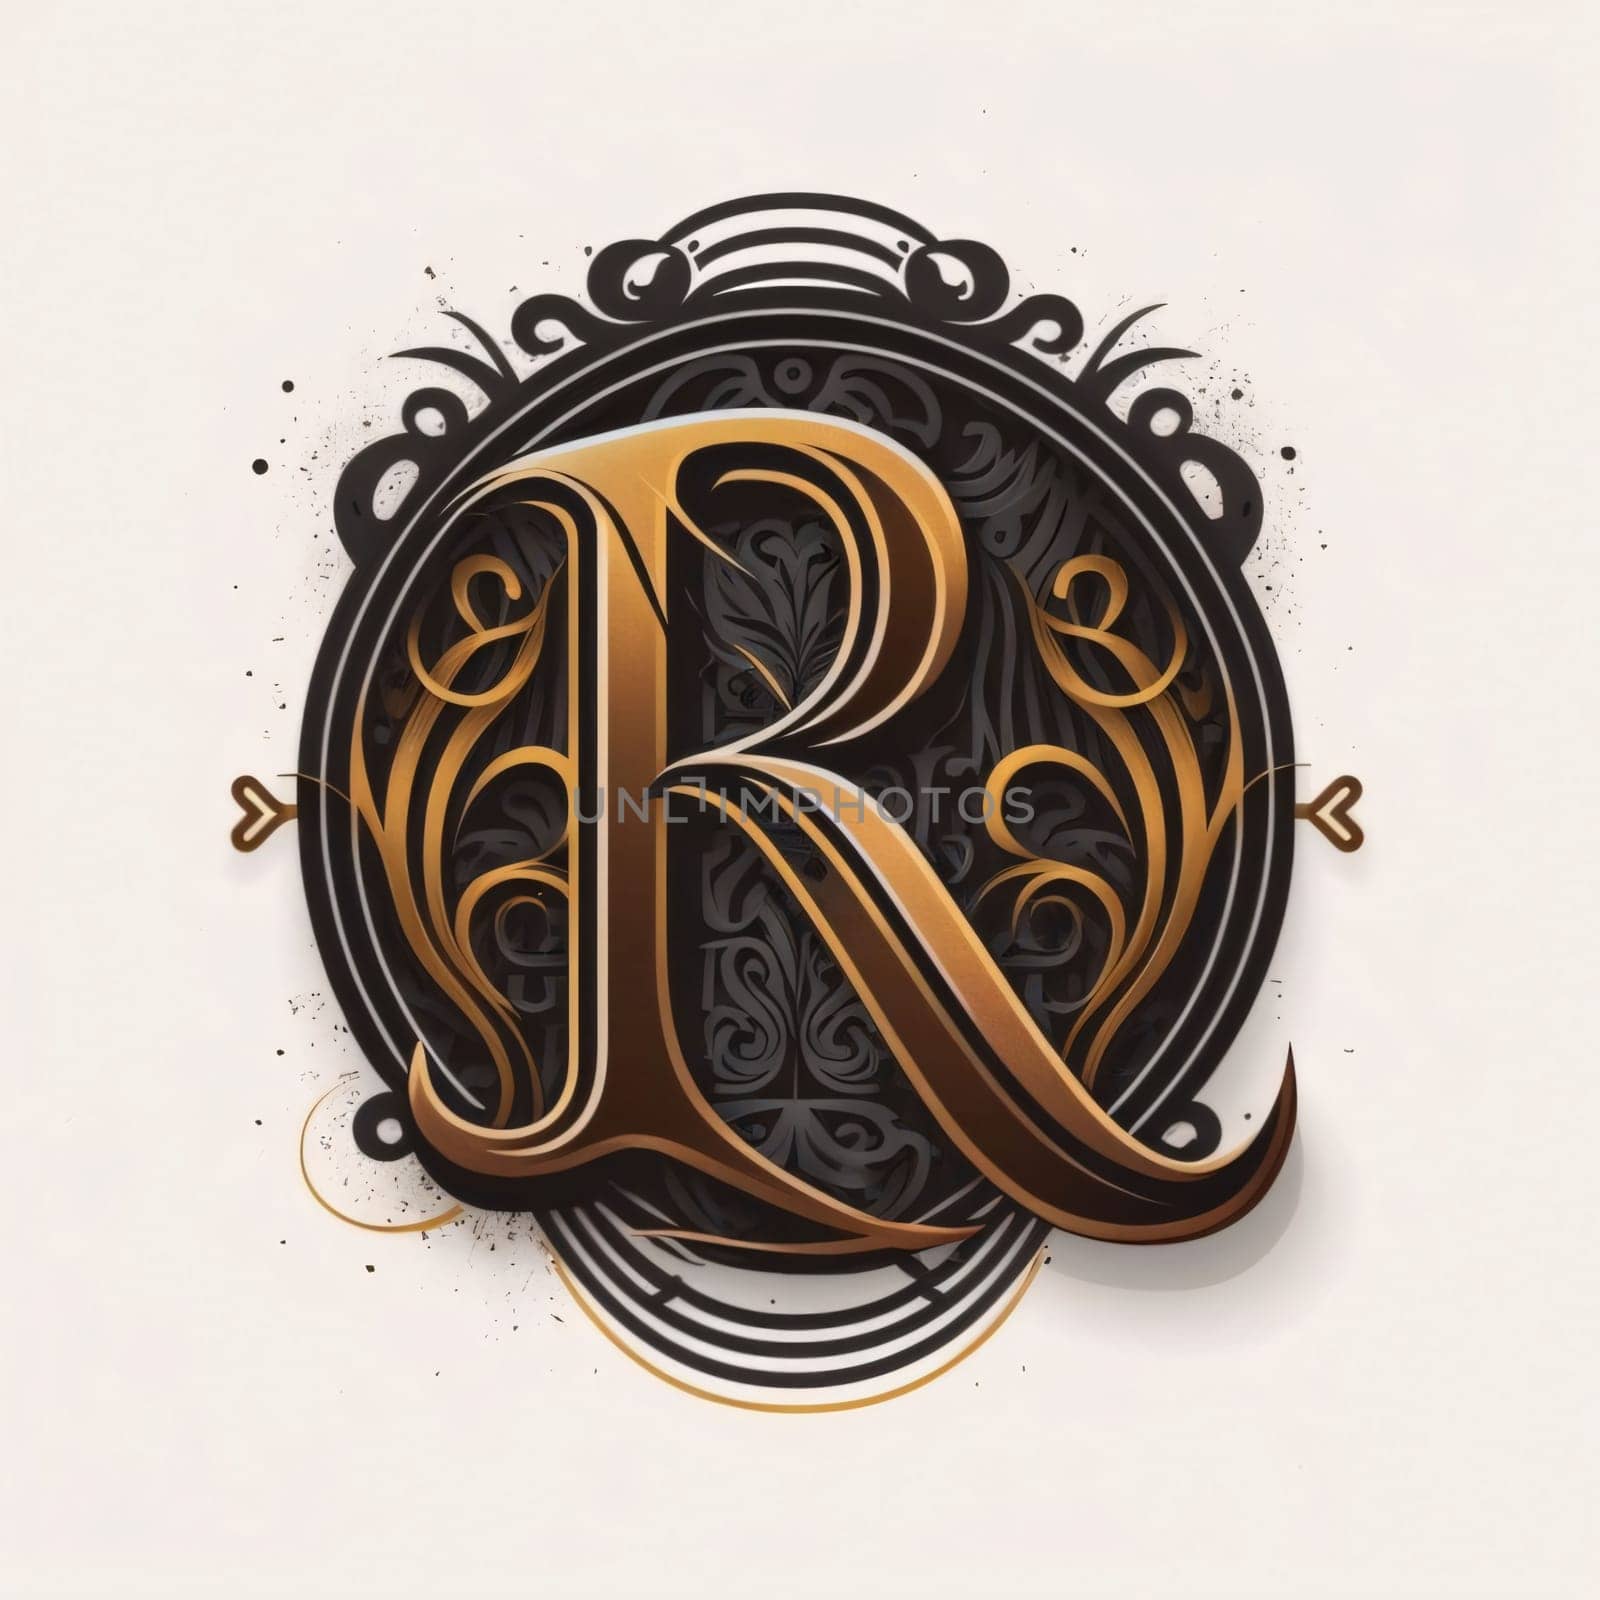 Graphic alphabet letters: Vintage monogram design element. Elegant letter R.